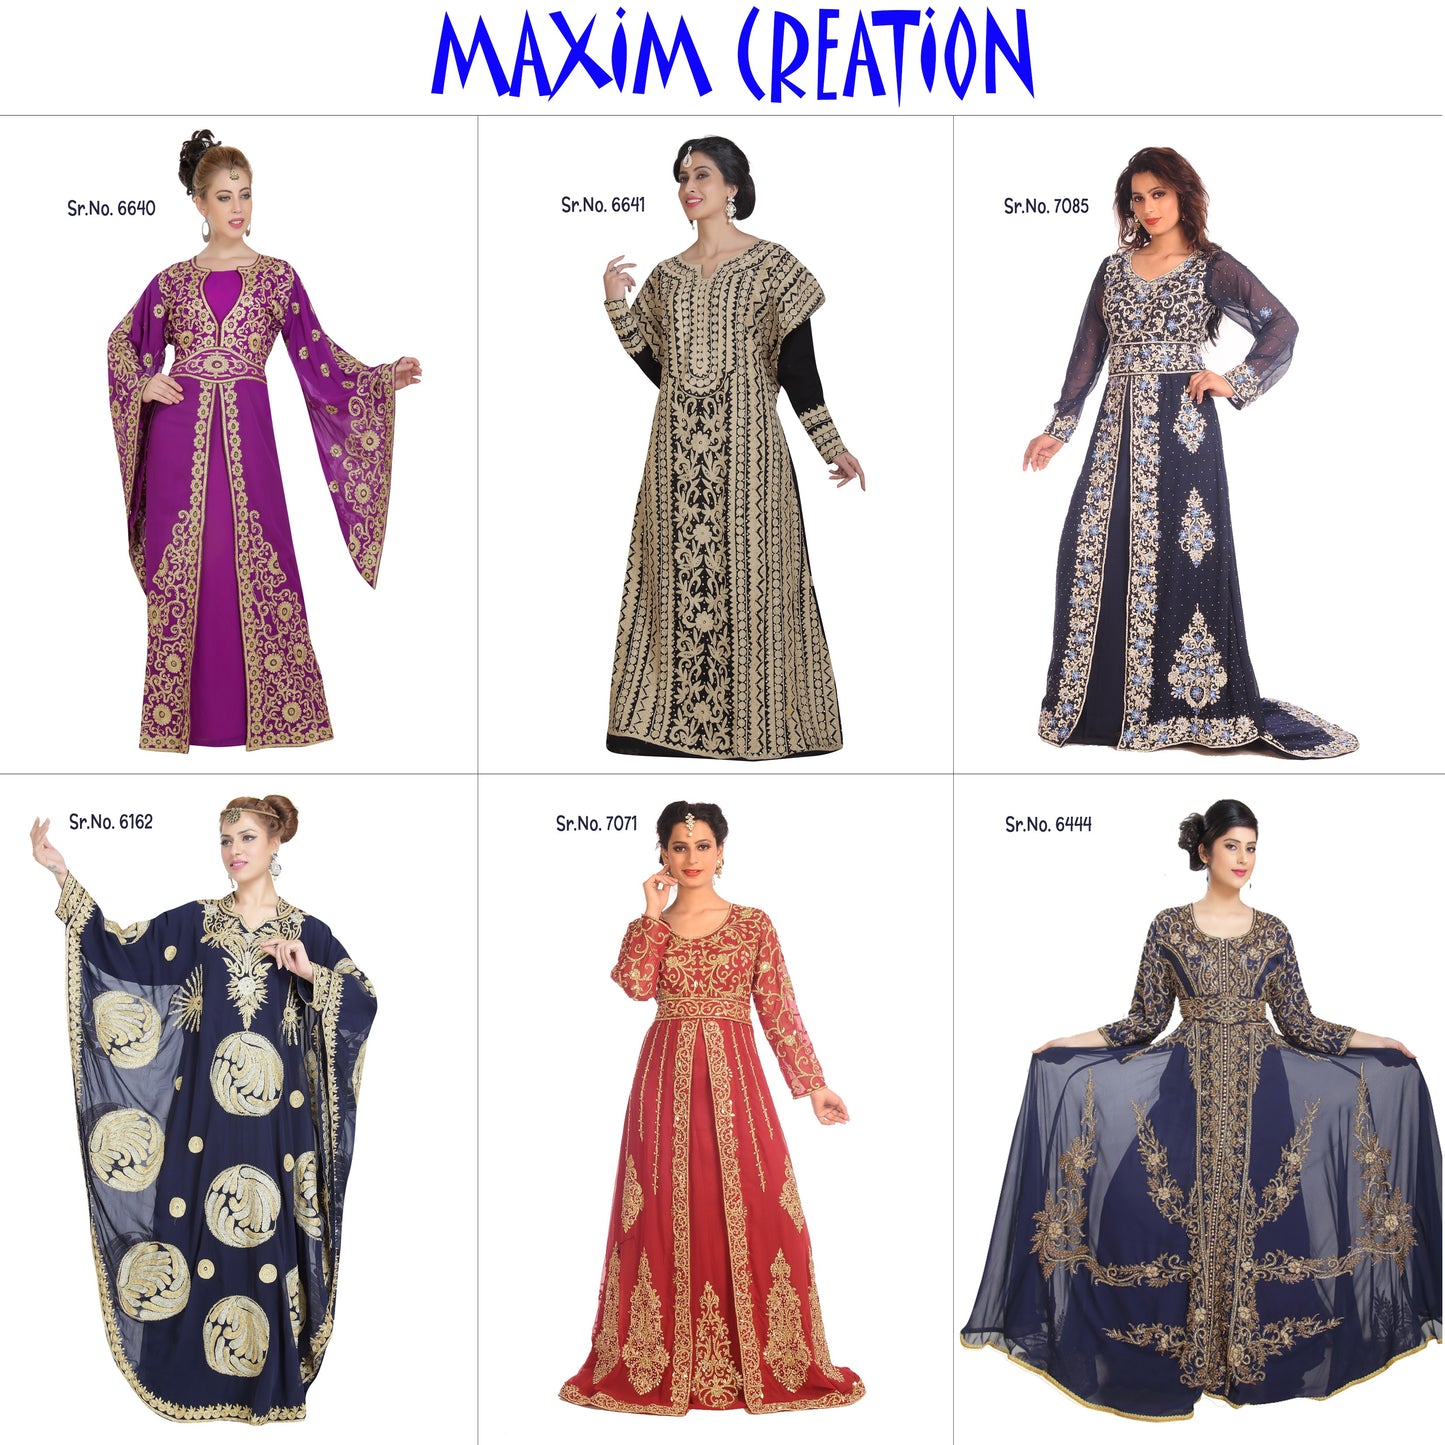 Satin Maxi Dress Evening Gown - Maxim Creation